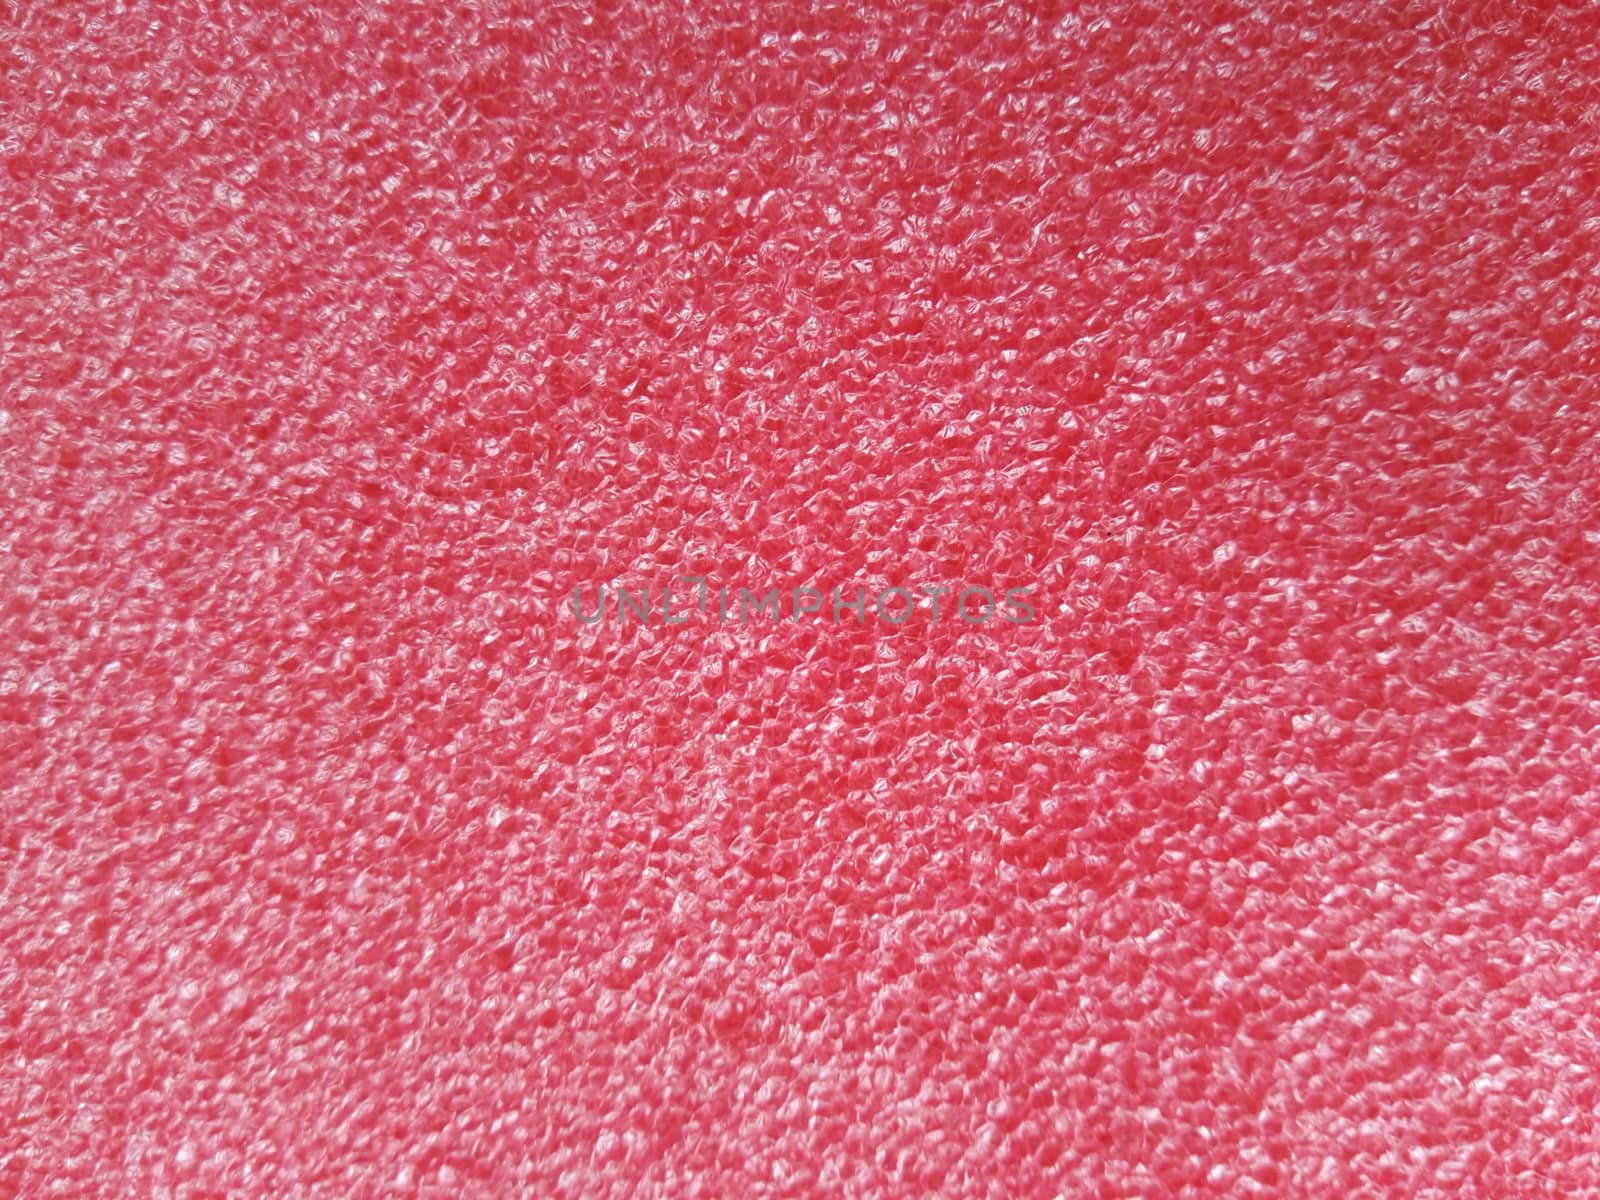 Foam sponge texture background by wattanaphob